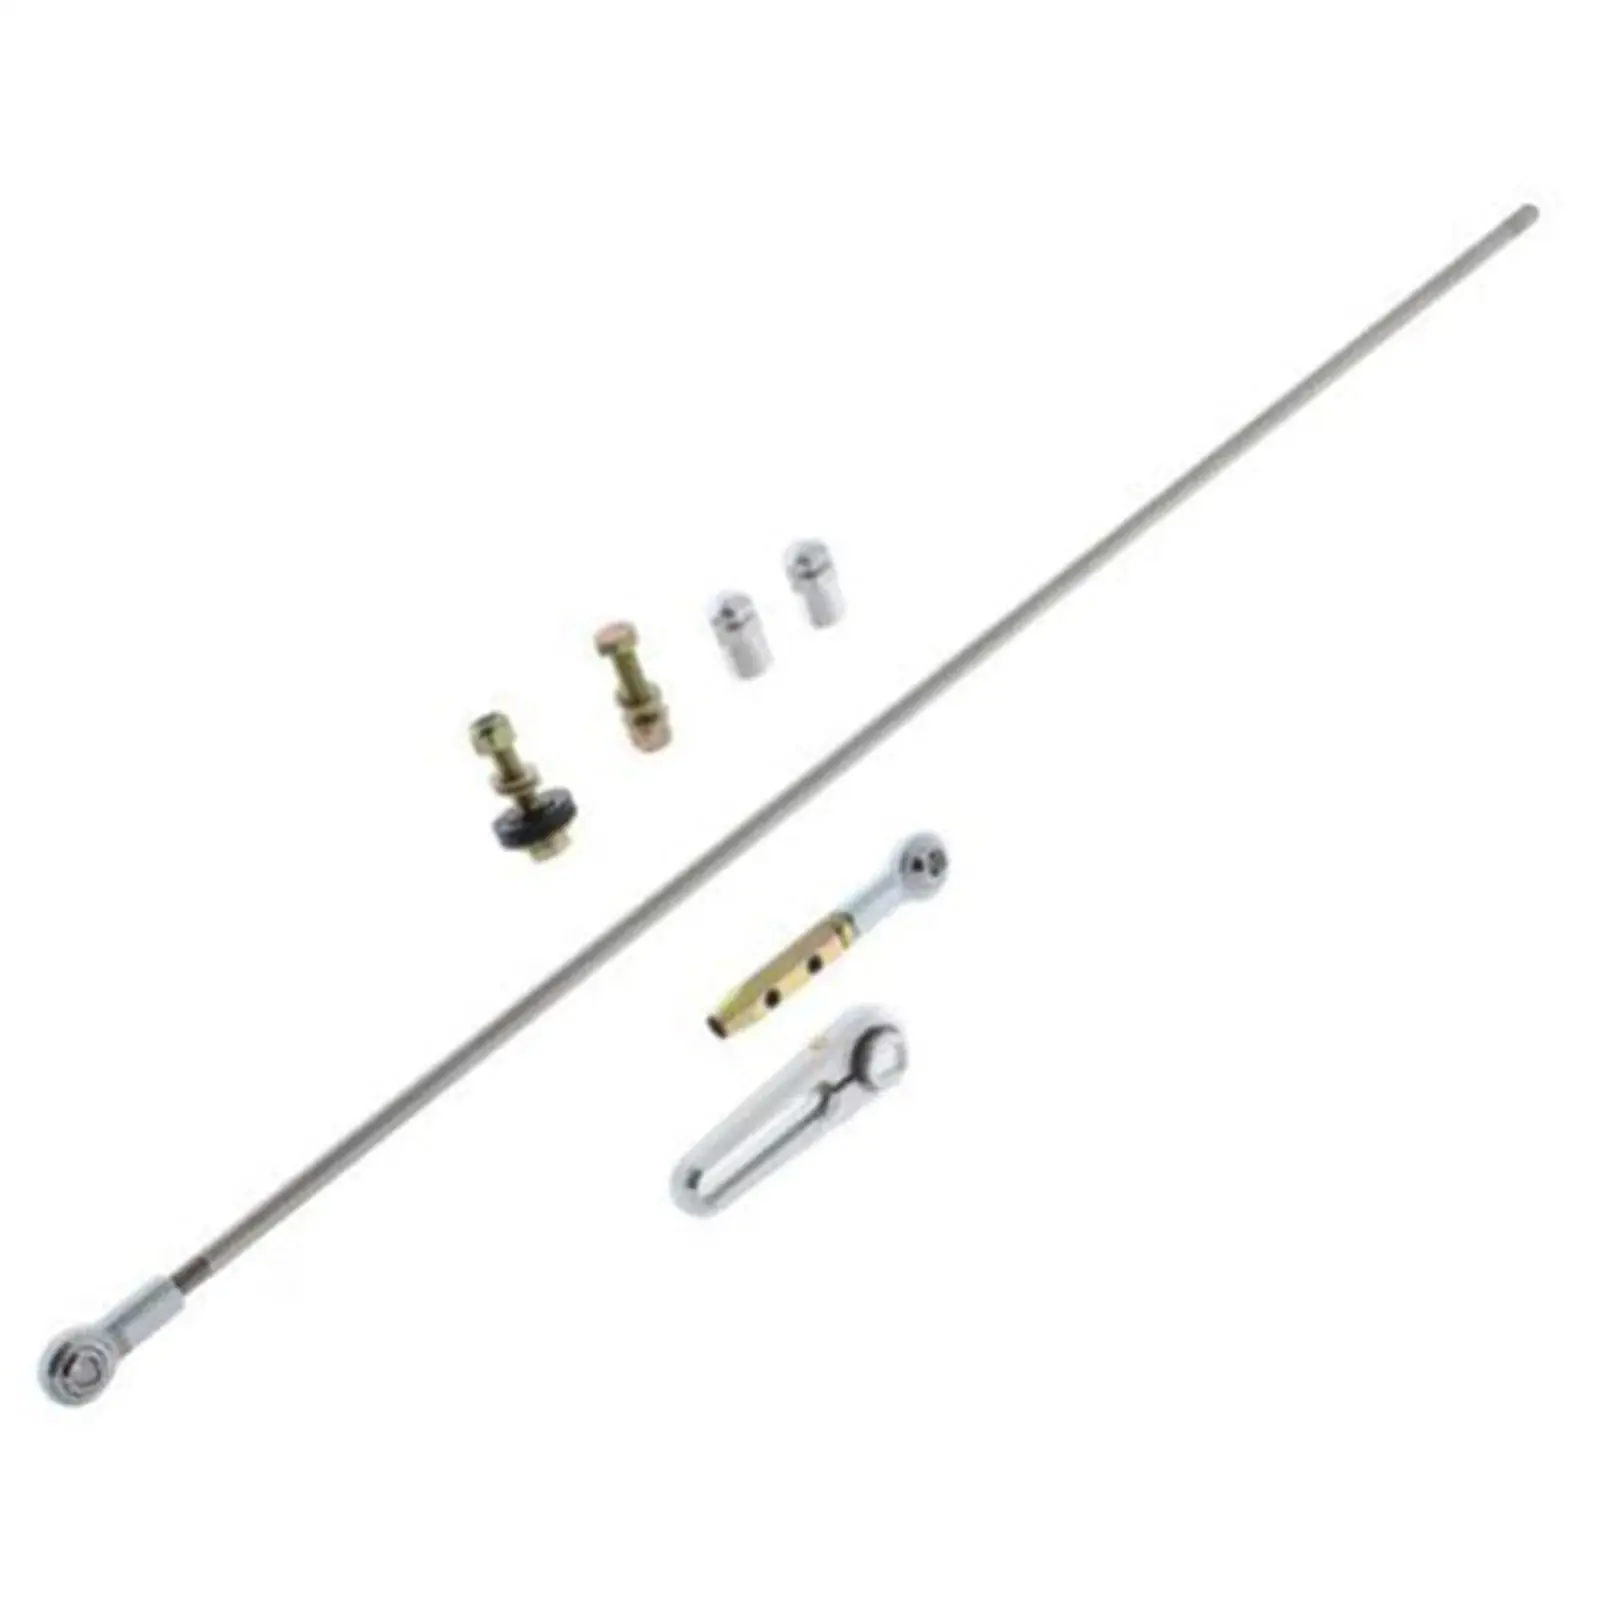 Transmission Shift Linkage Kit Spare Parts Convenient Installation Shift Linkage Billet Aluminum Column Arm for GM 700R4